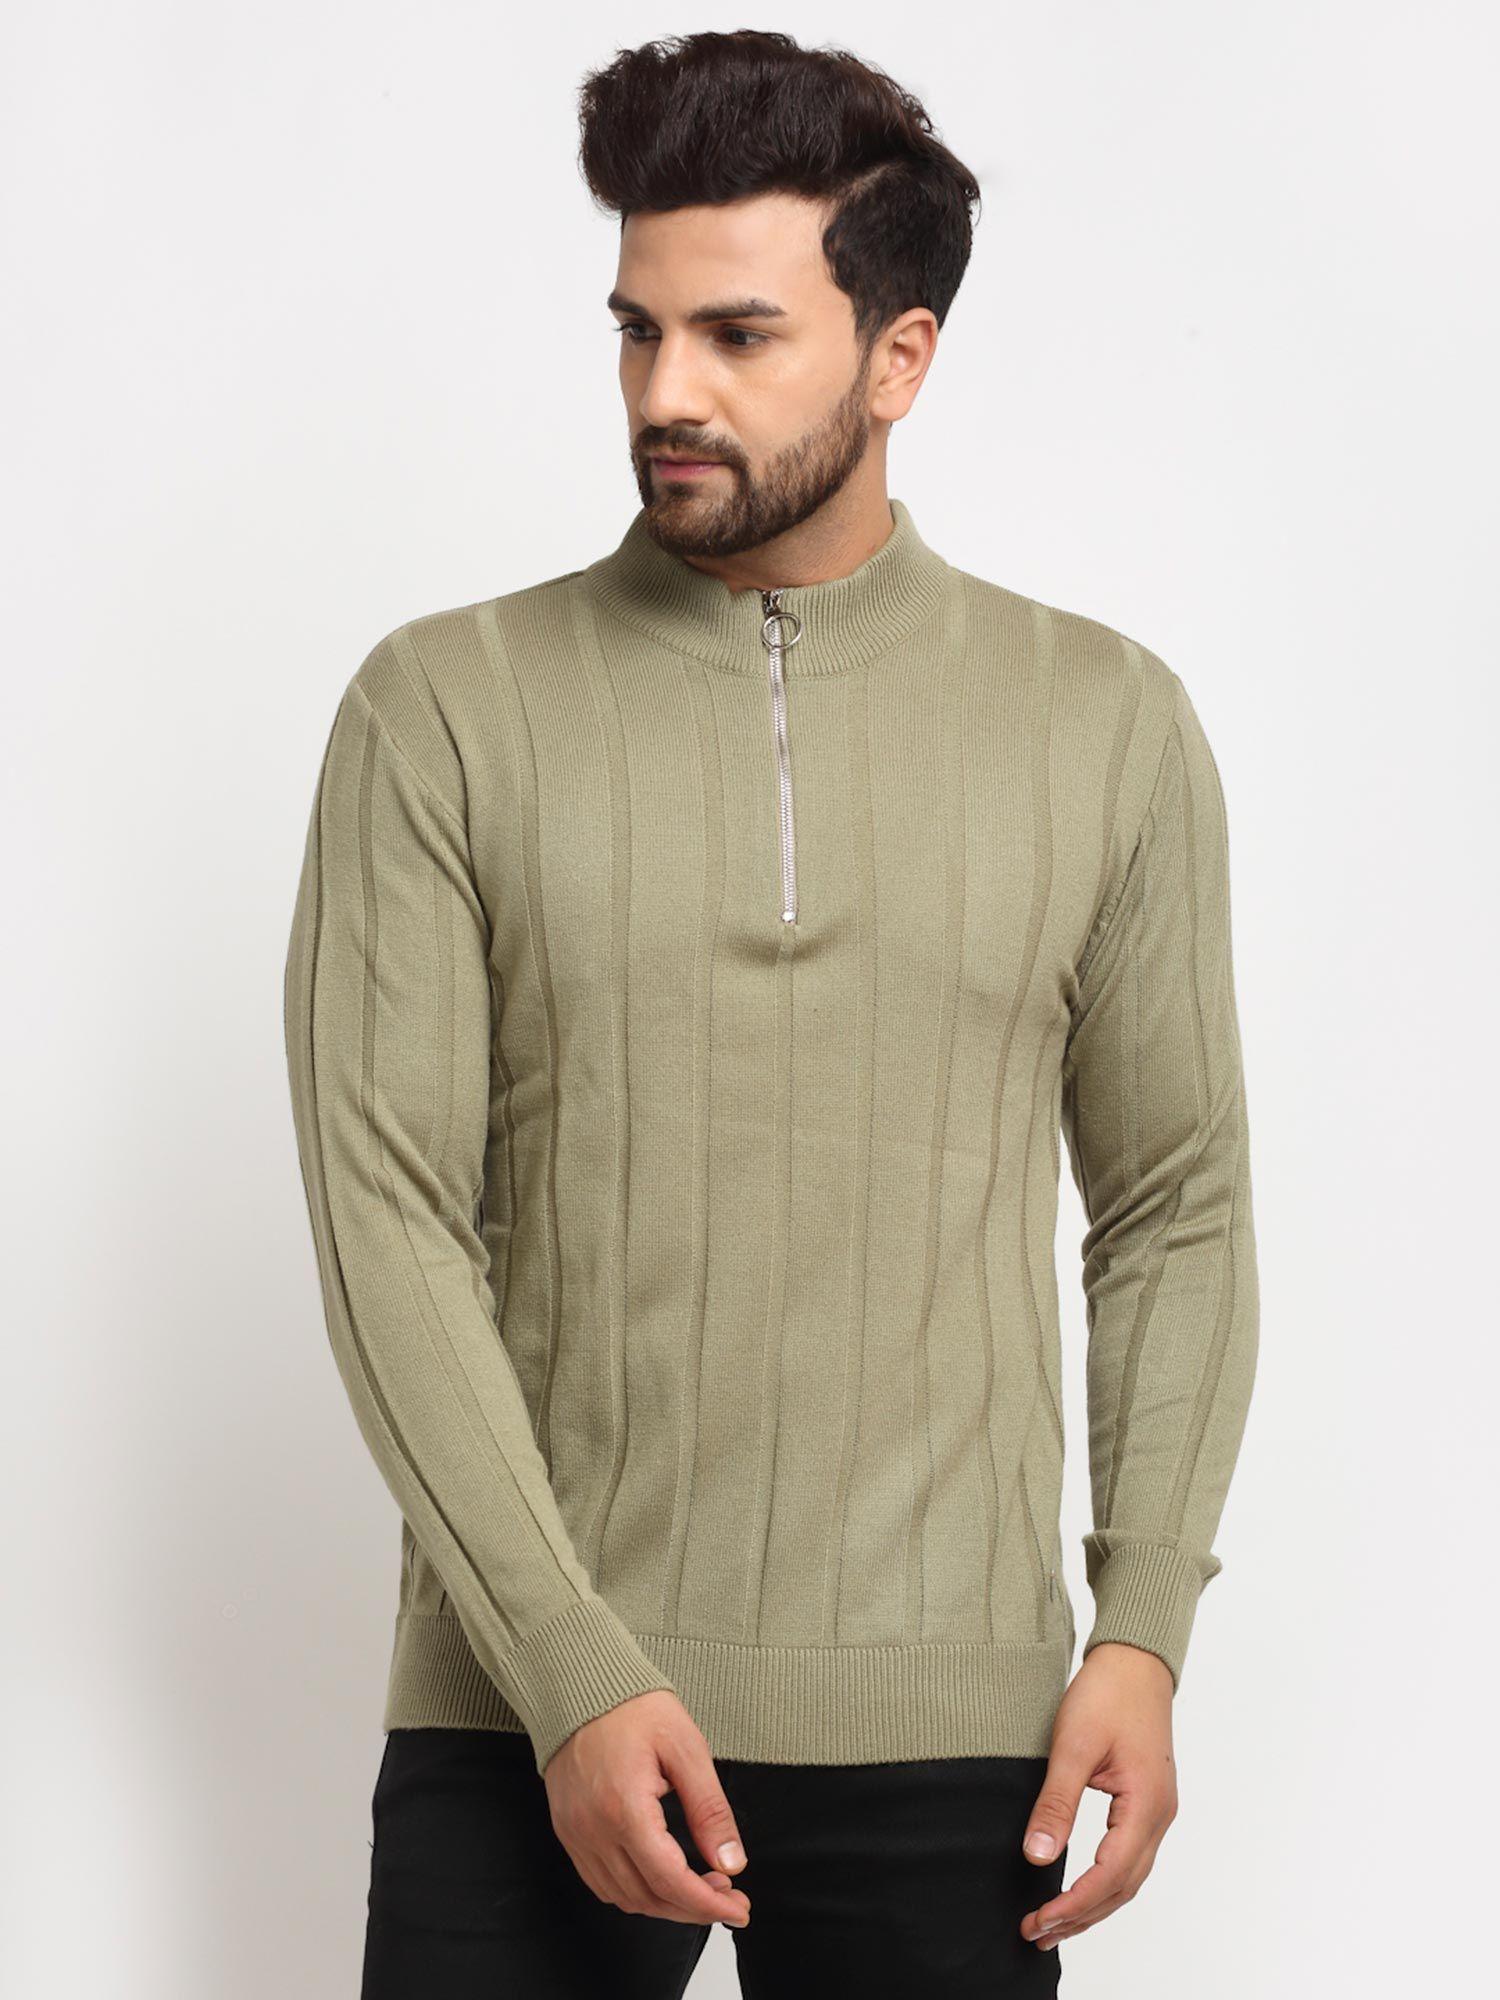 men's-olive-full-sleeve-striped-front-half-zipper-high-neck-sweater